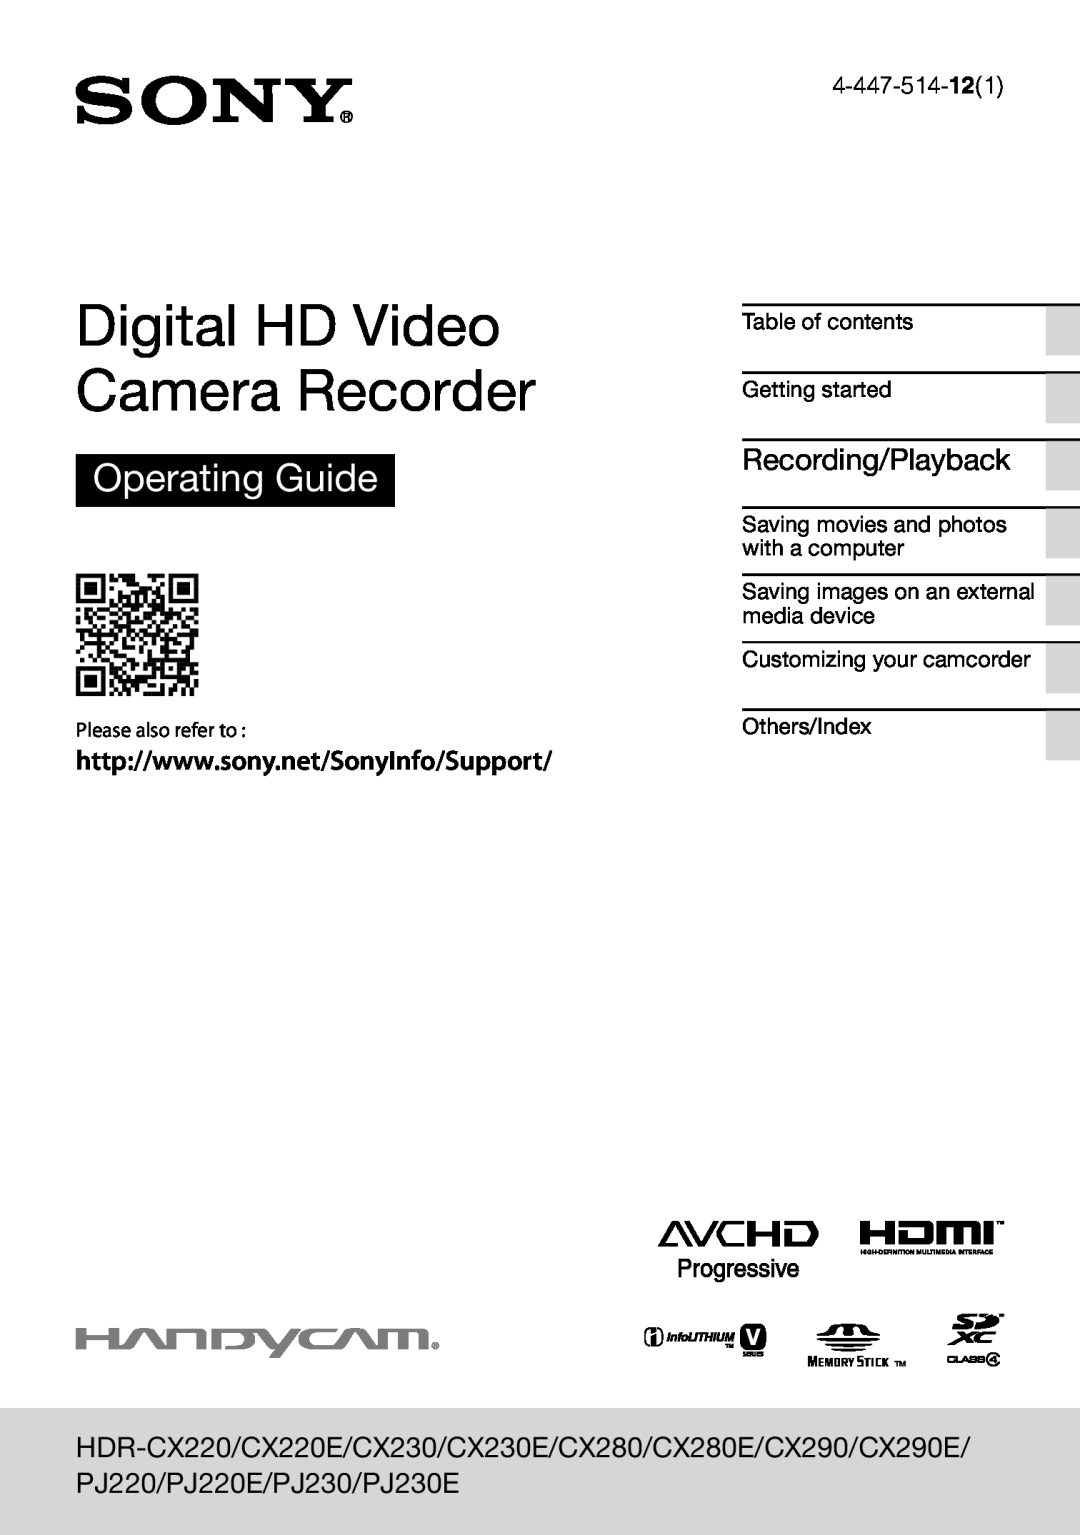 Sony HDR-CX220, PJ230, PJ220E manual Recording/Playback, 4-447-514-121, Digital HD Video Camera Recorder, Operating Guide 